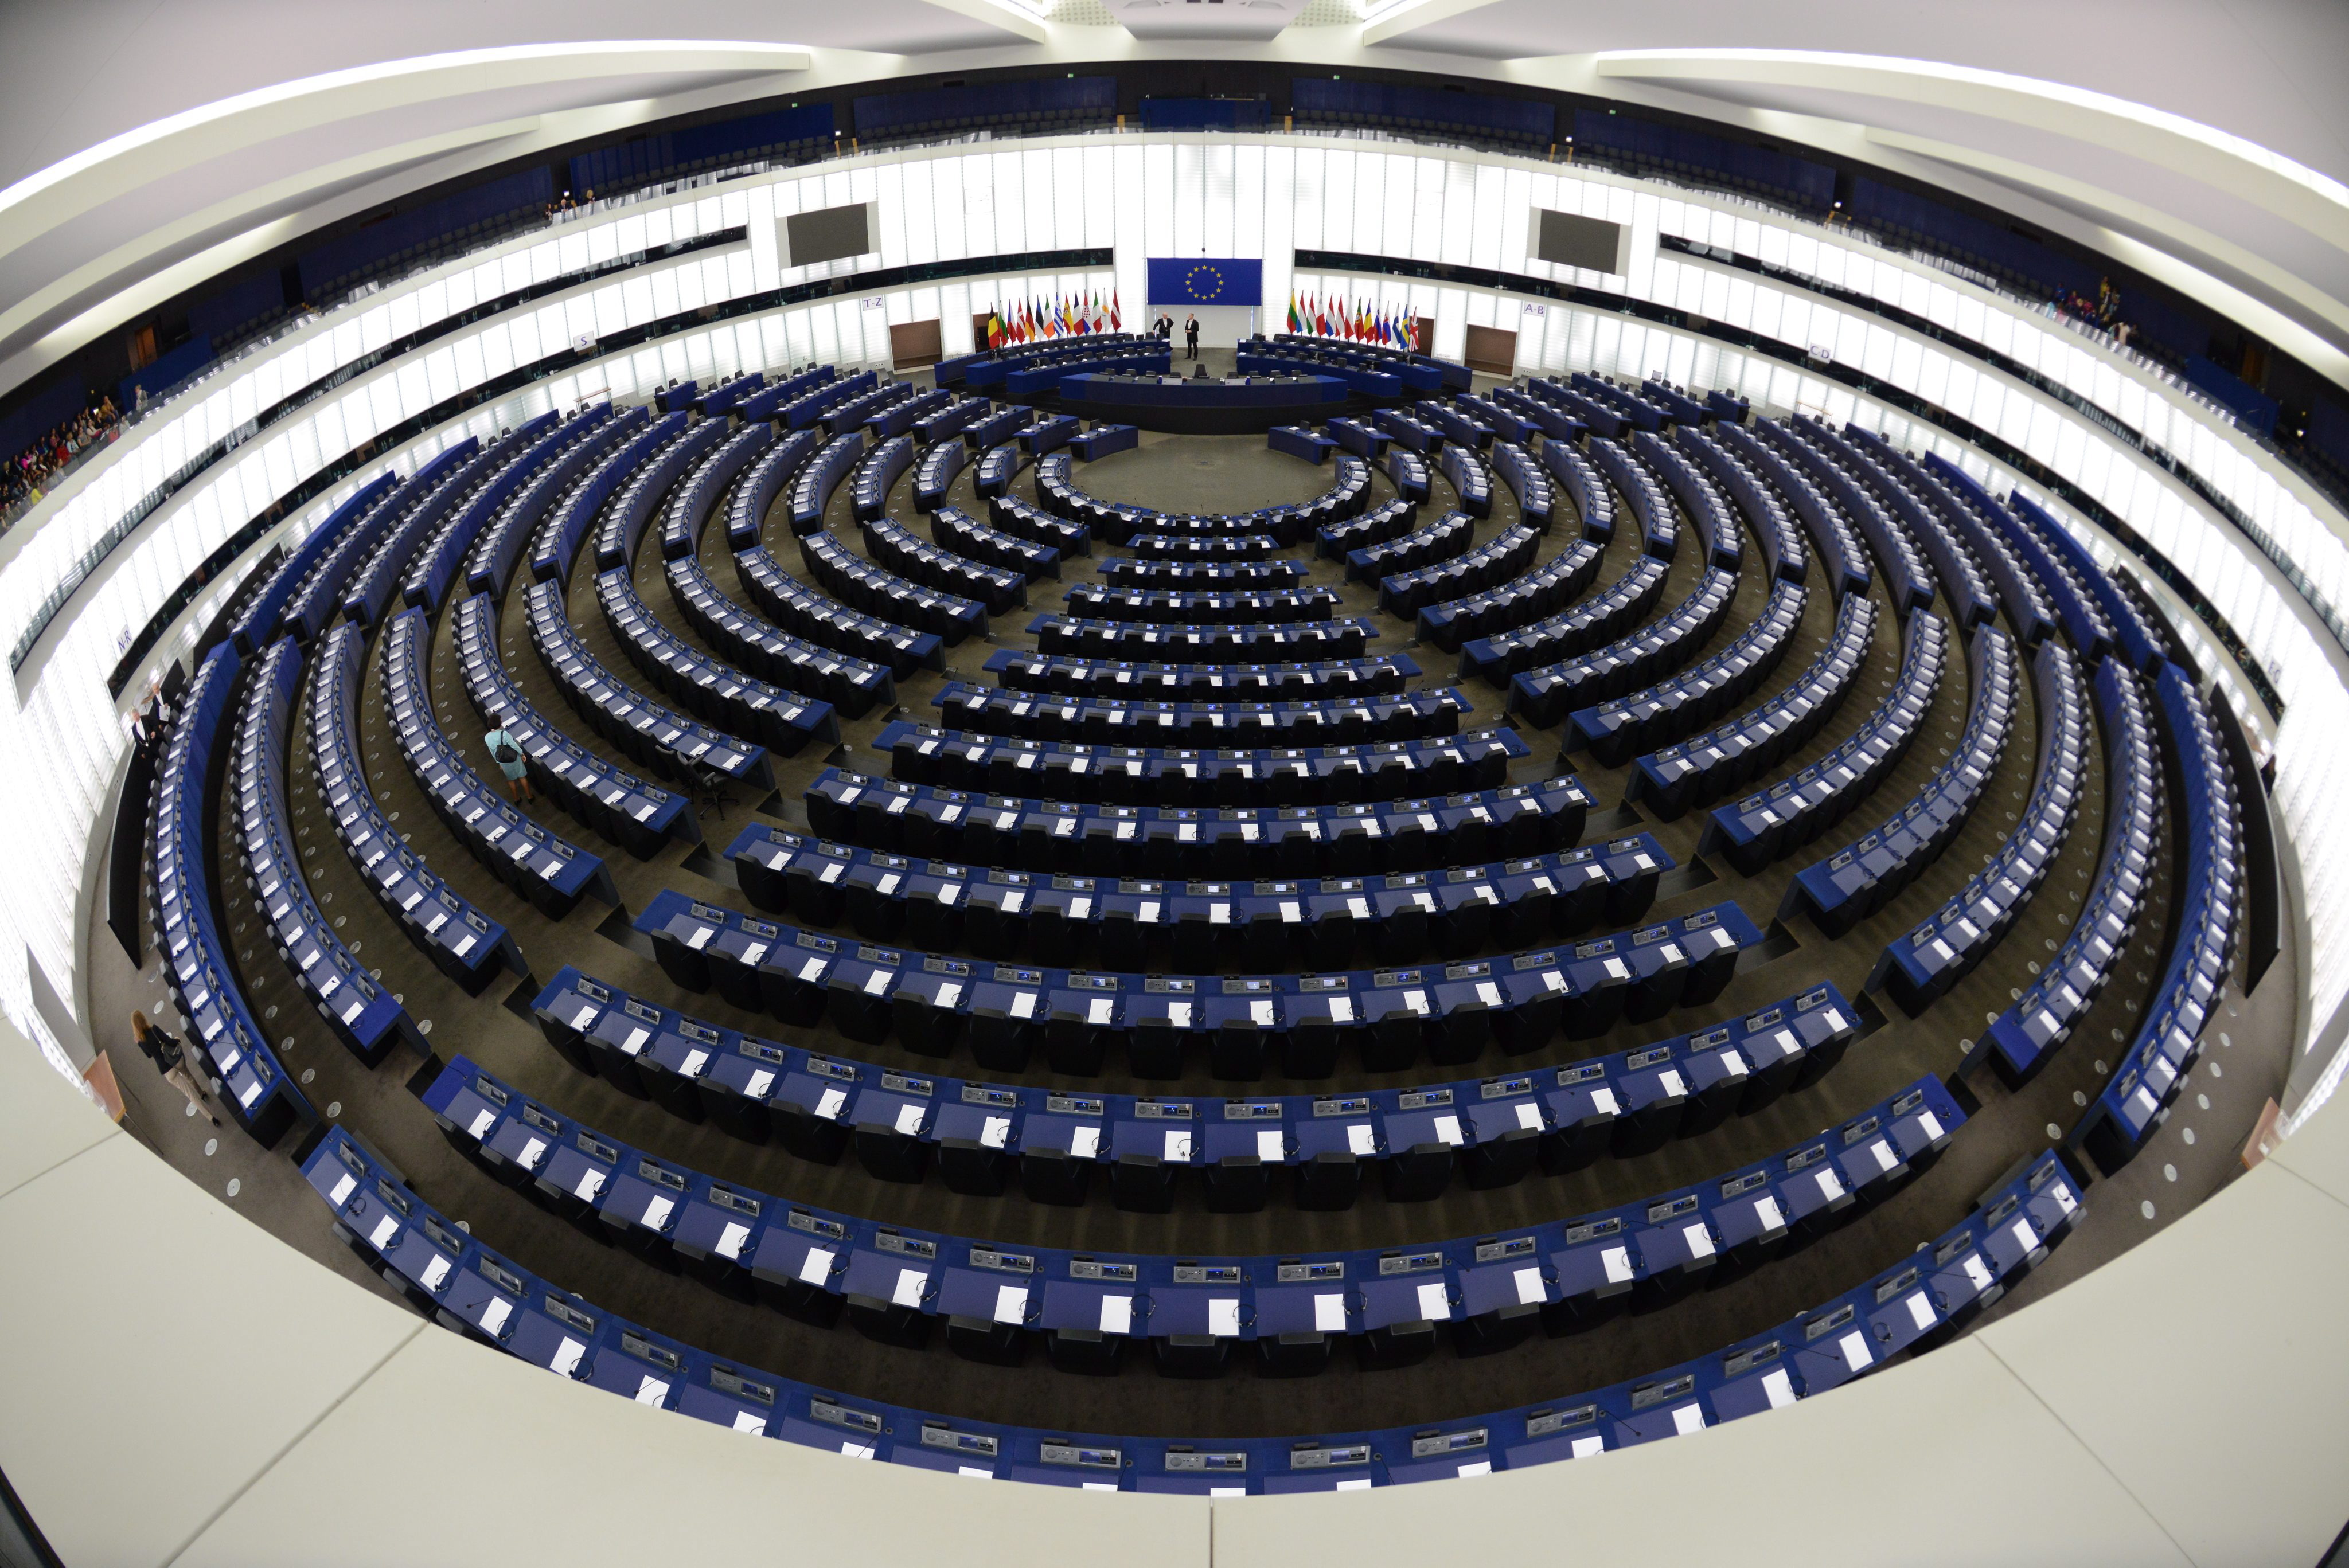 Leerer Plenarsaal der Europaparlaments in Straßburg | picture alliance / dpa